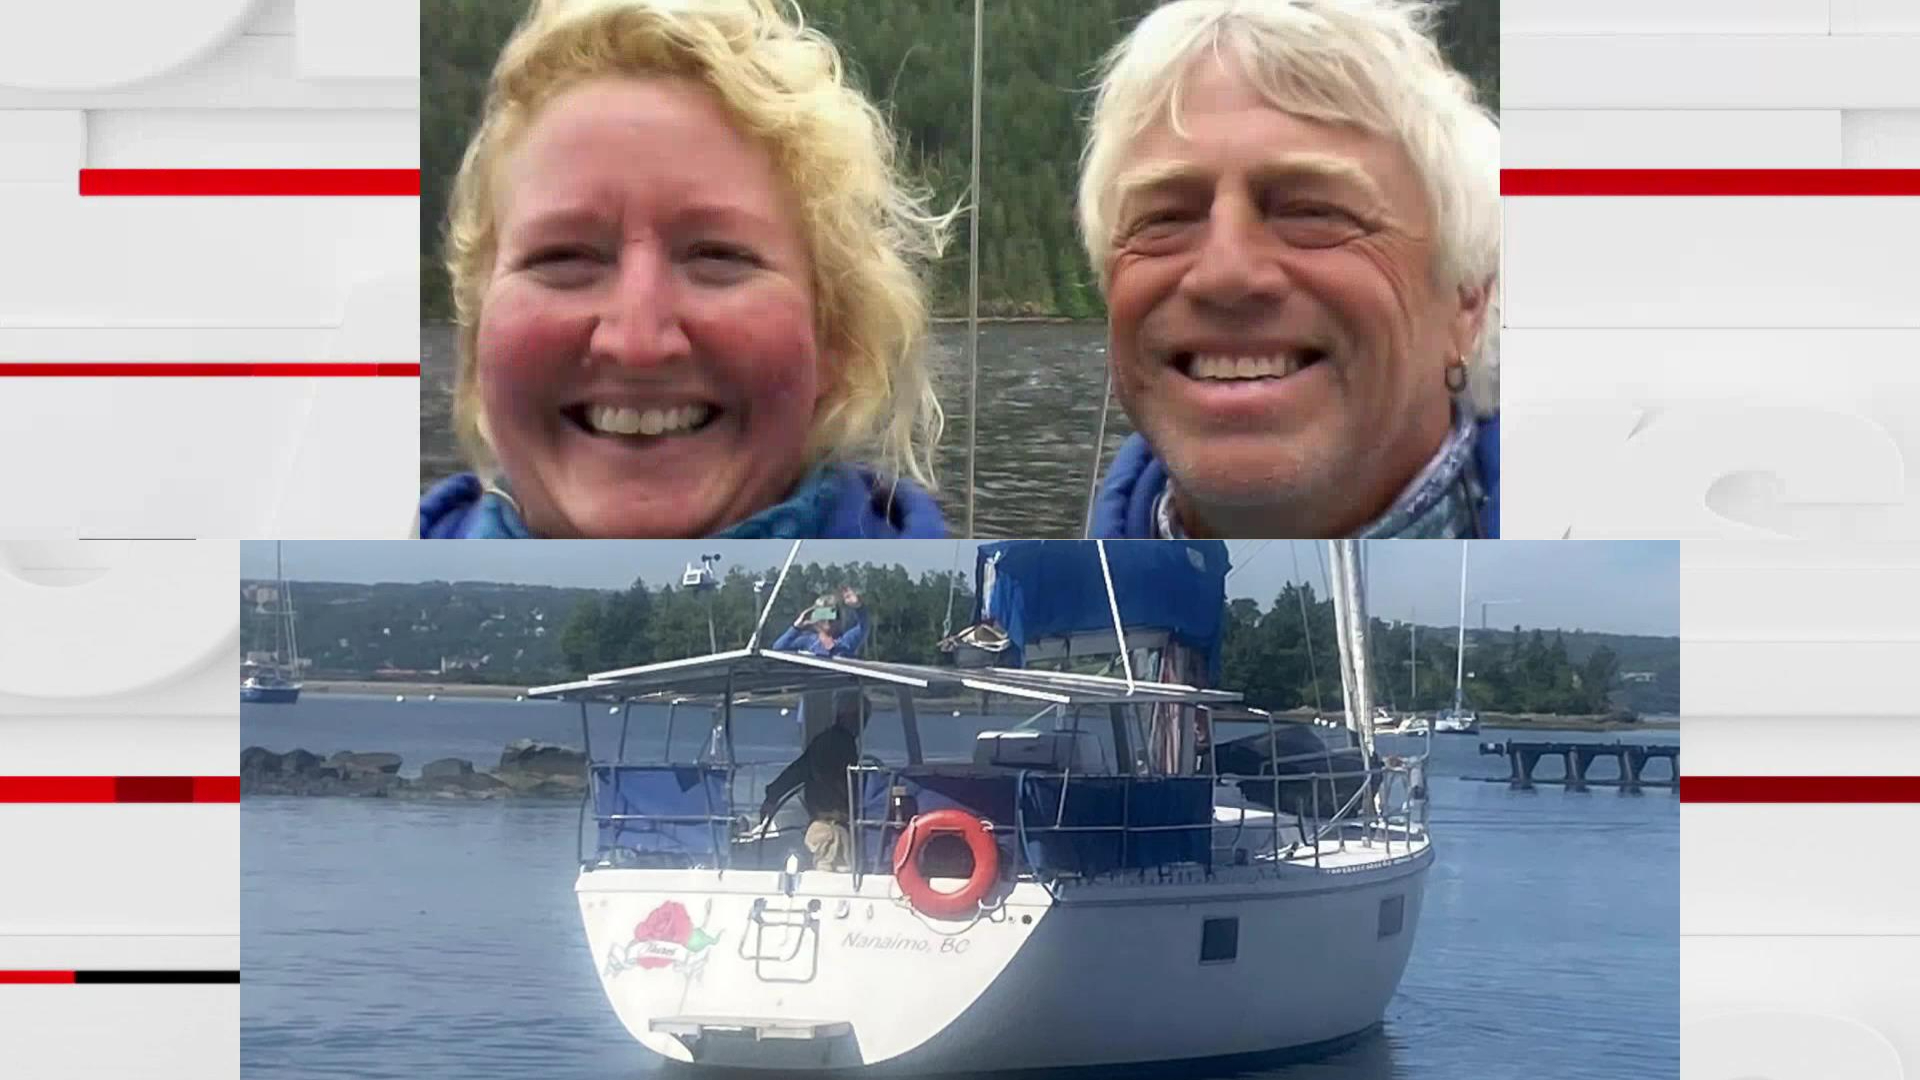 Two B.C. sailors found dead off coast of Nova Scotia: RCMP